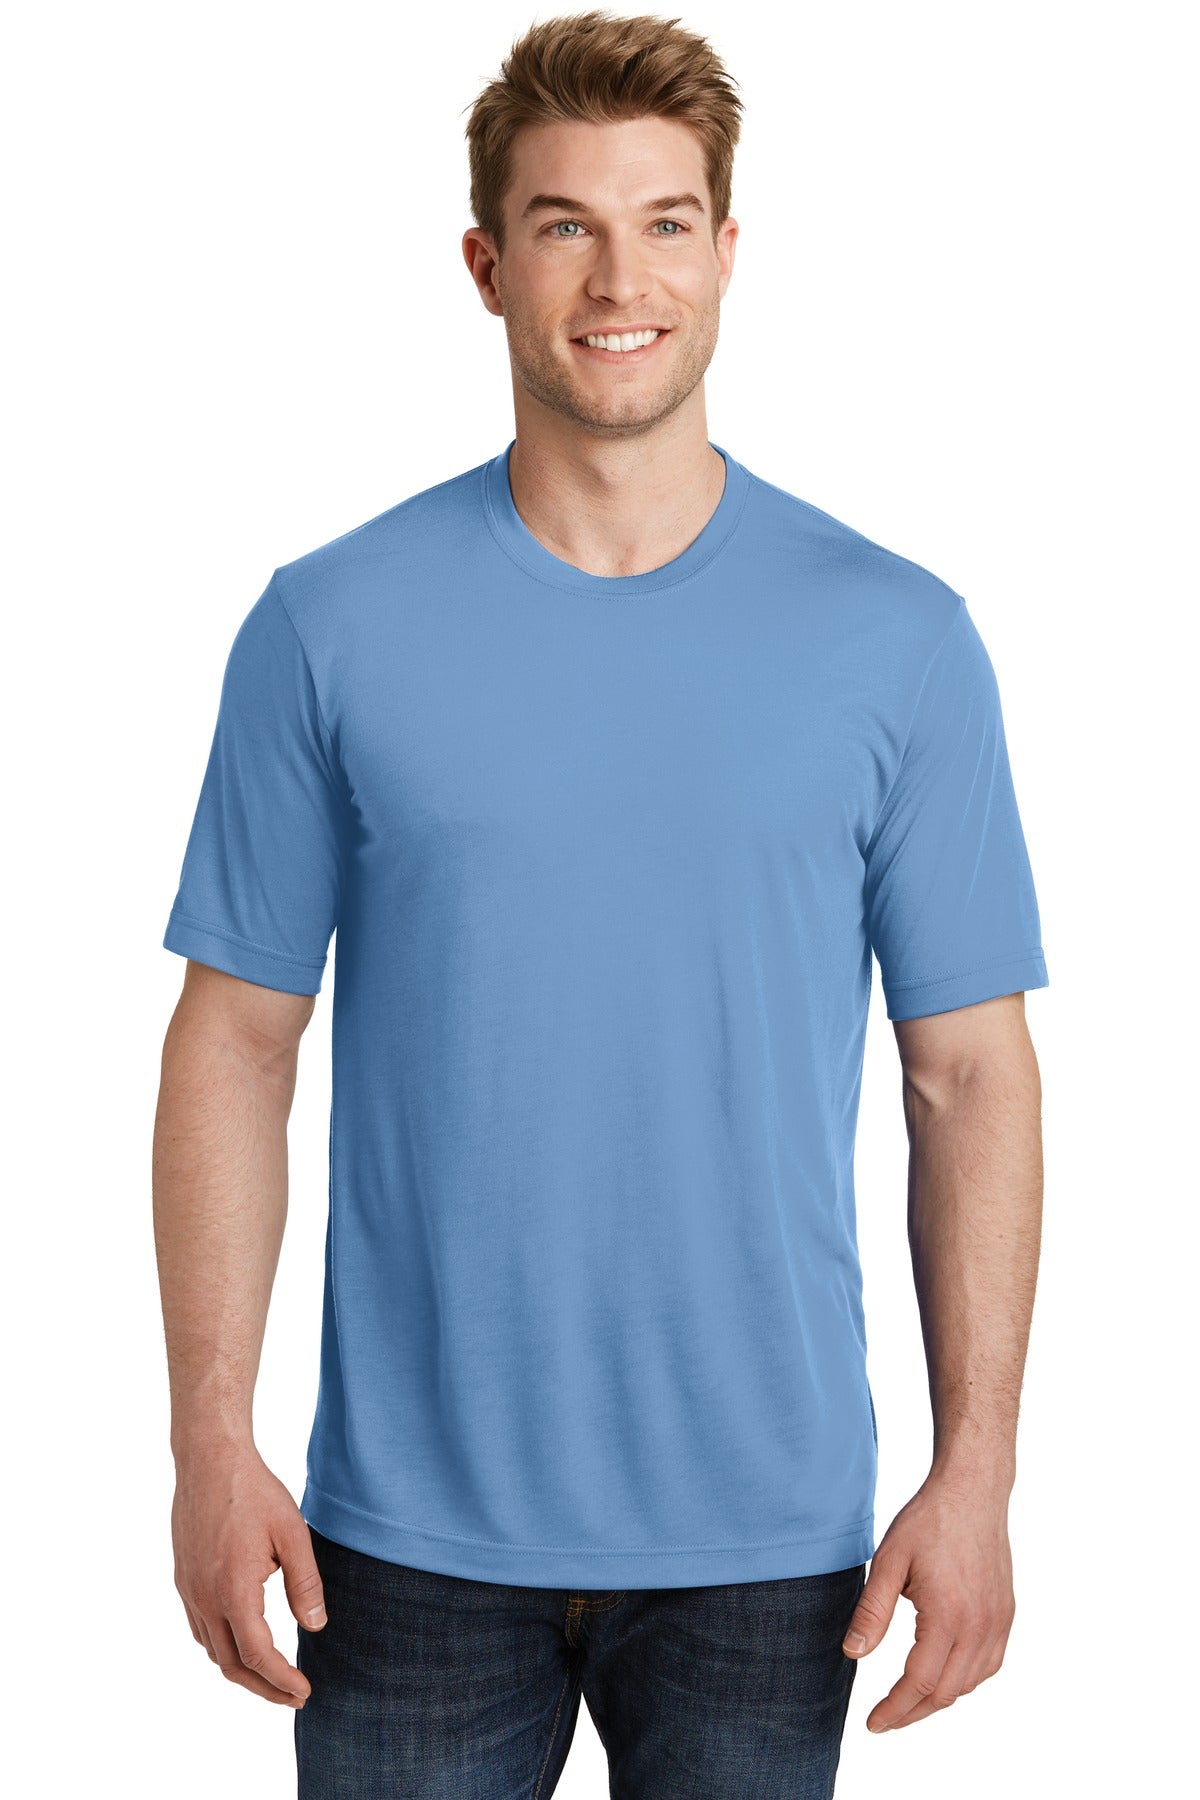 Photo of Sport-Tek T-Shirts ST450  color  Carolina Blue